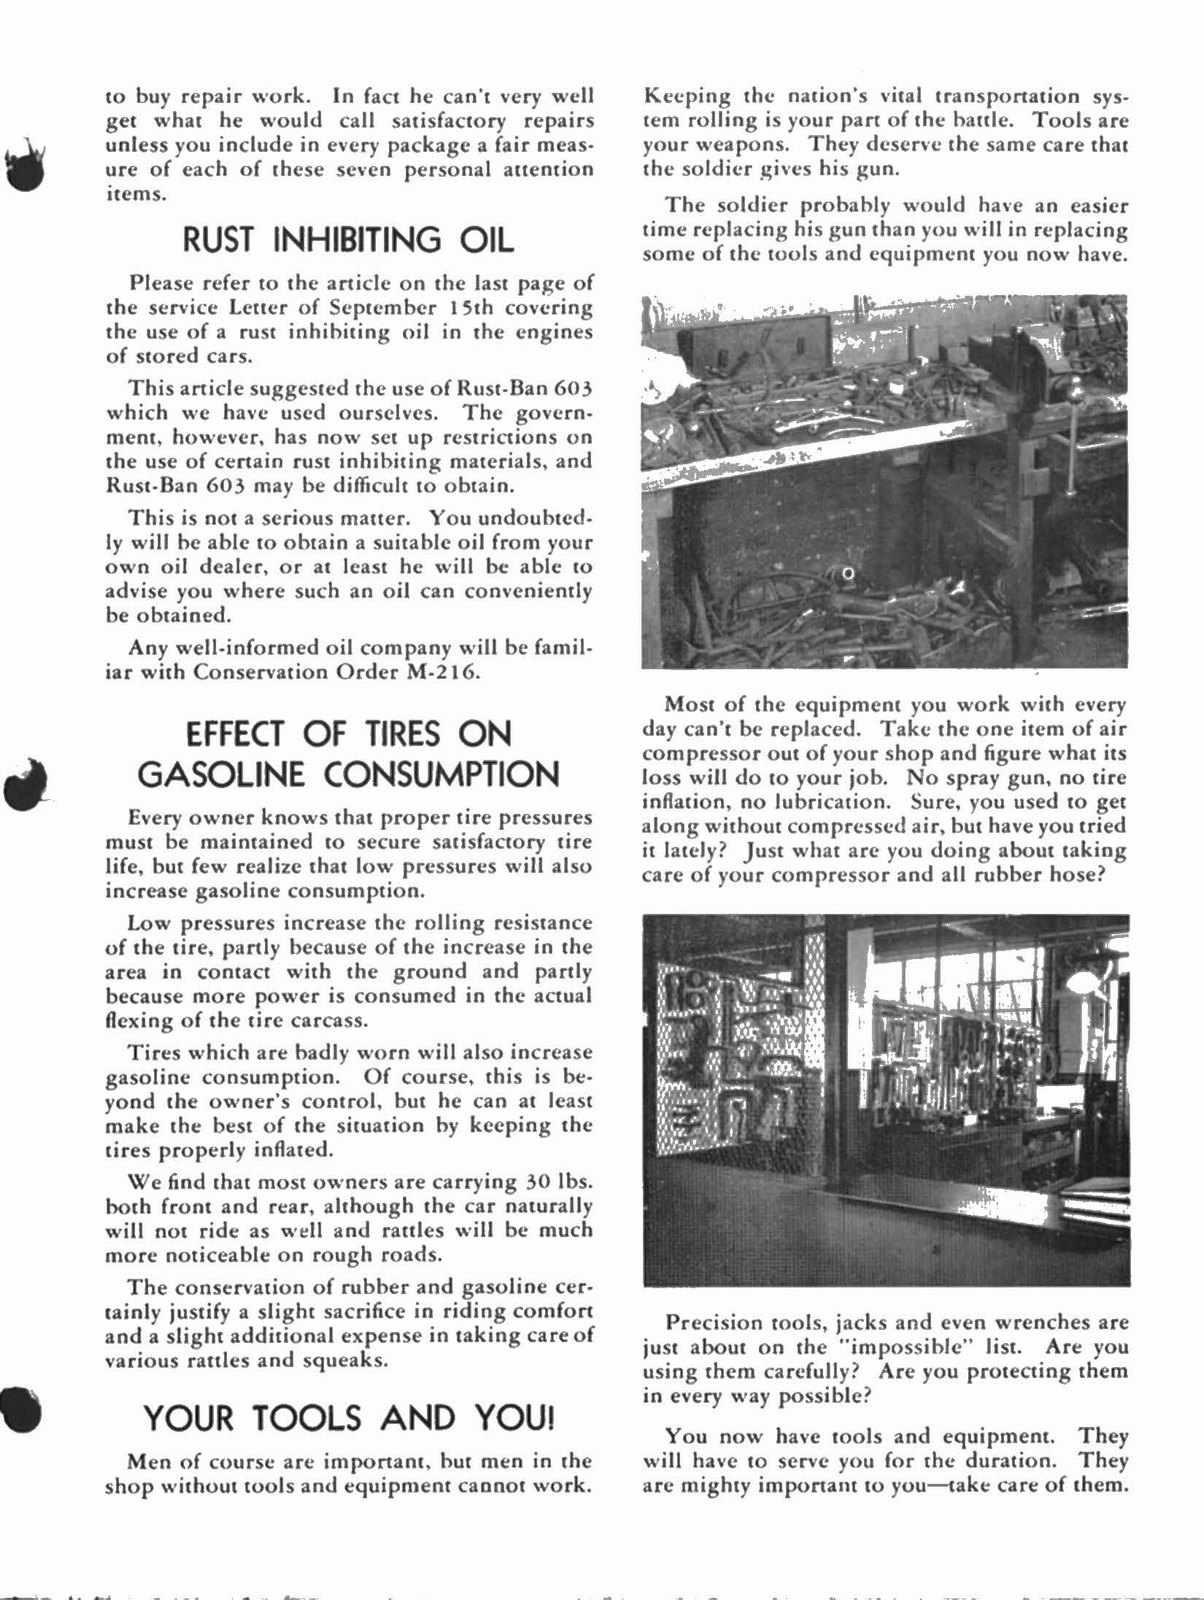 n_1942  Packard Service Letter-19-03.jpg